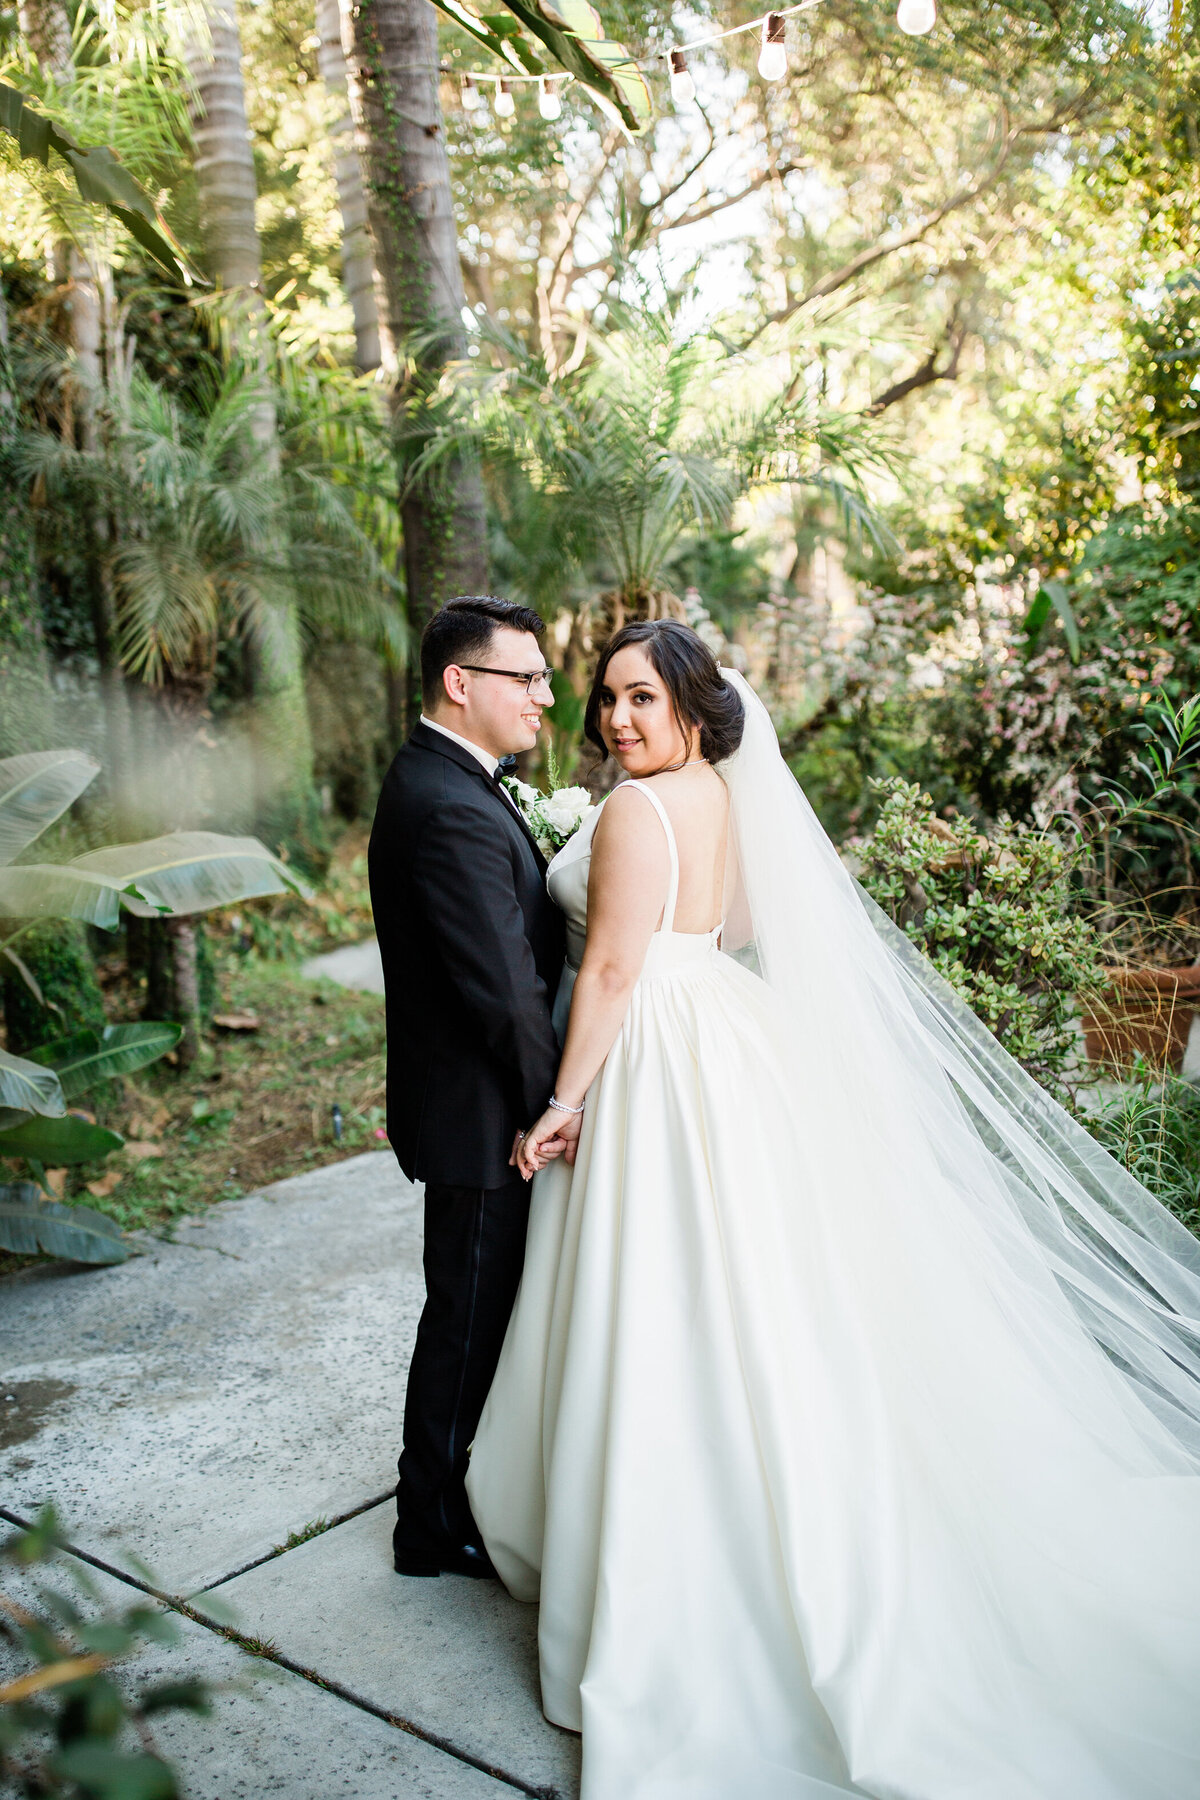 Los Angeles Wedding Planner - Robin Ballard Events - LA River Center and Garden - Alexis + Alex - 43